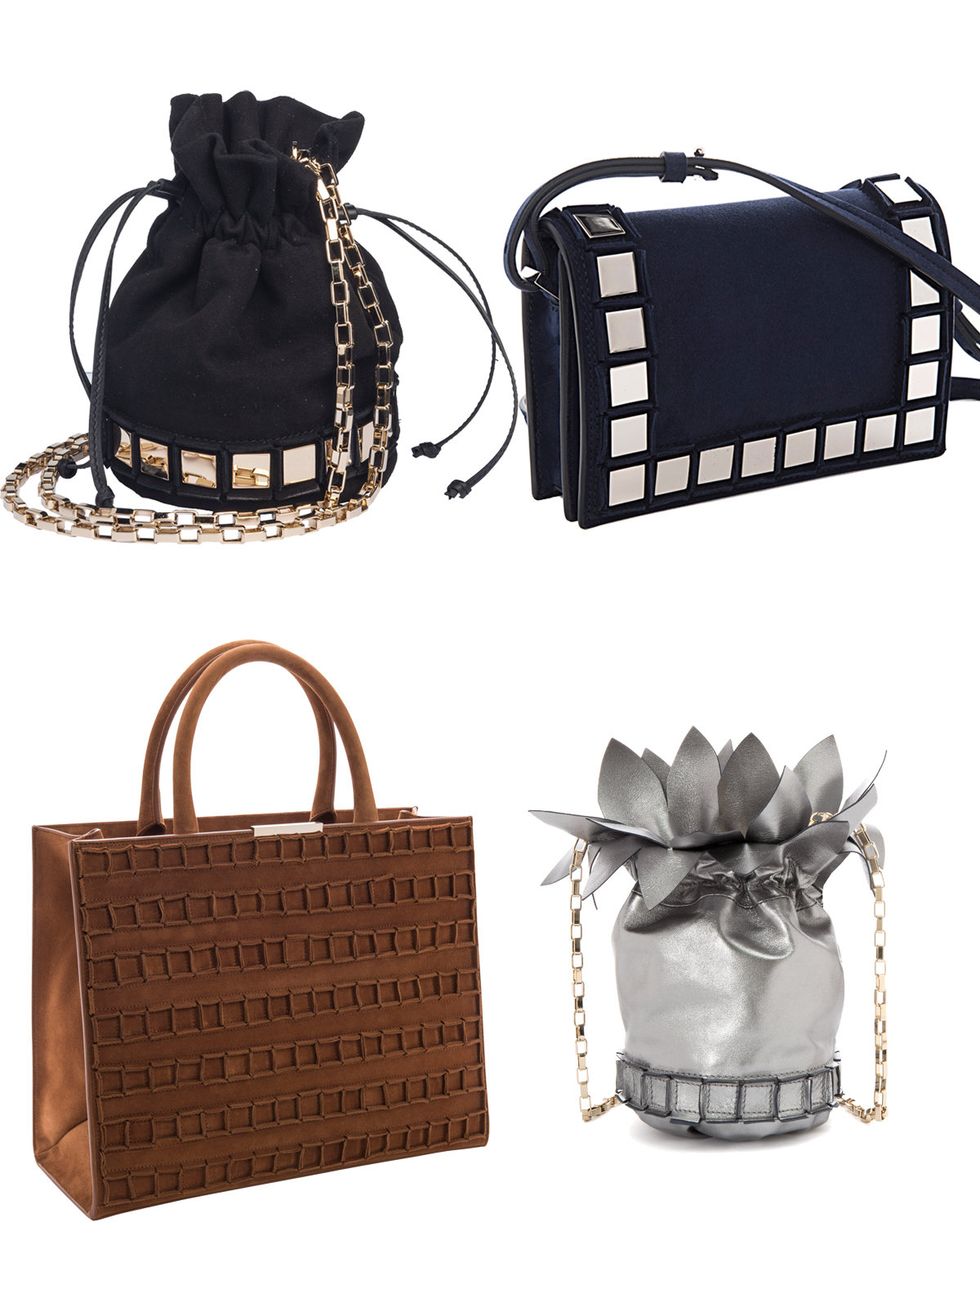 Bag, Handbag, Fashion accessory, Picnic basket, Basket, Present, Leather, Birkin bag, 